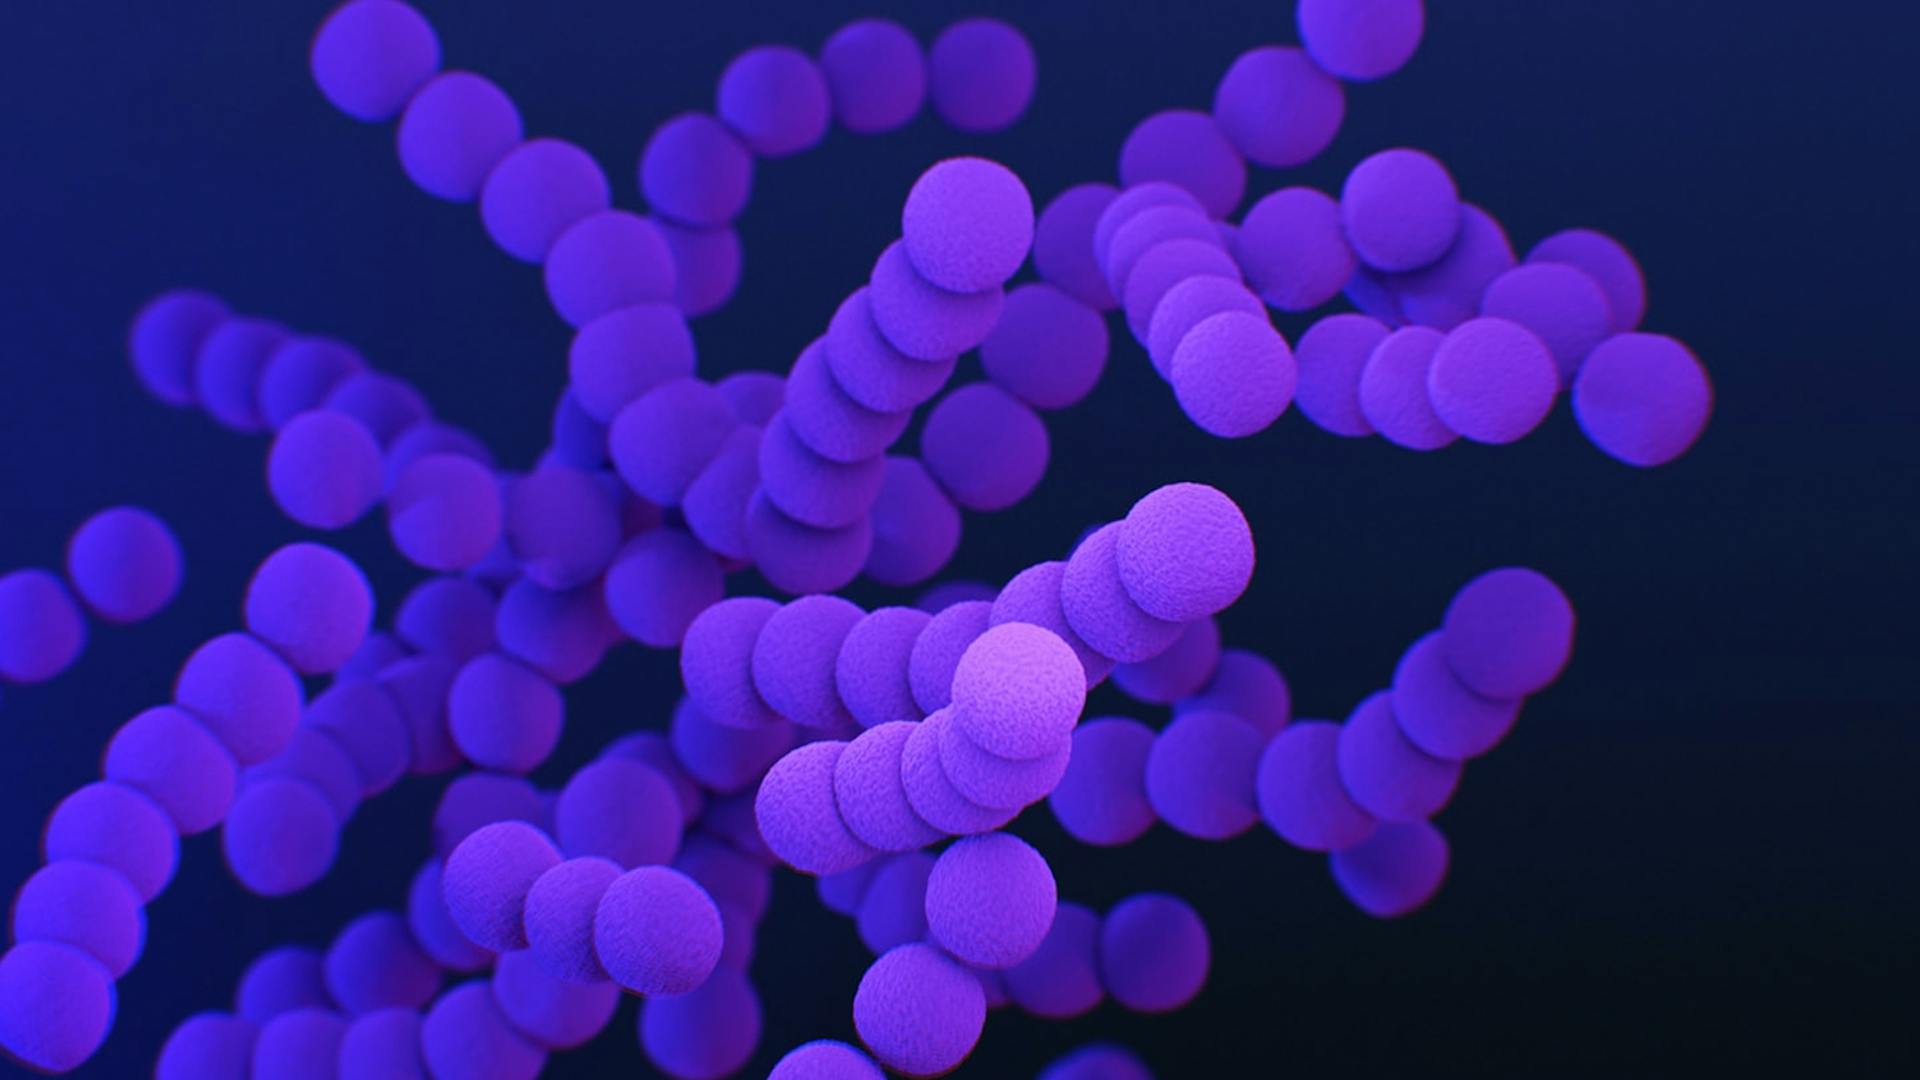 Image of purple molecules